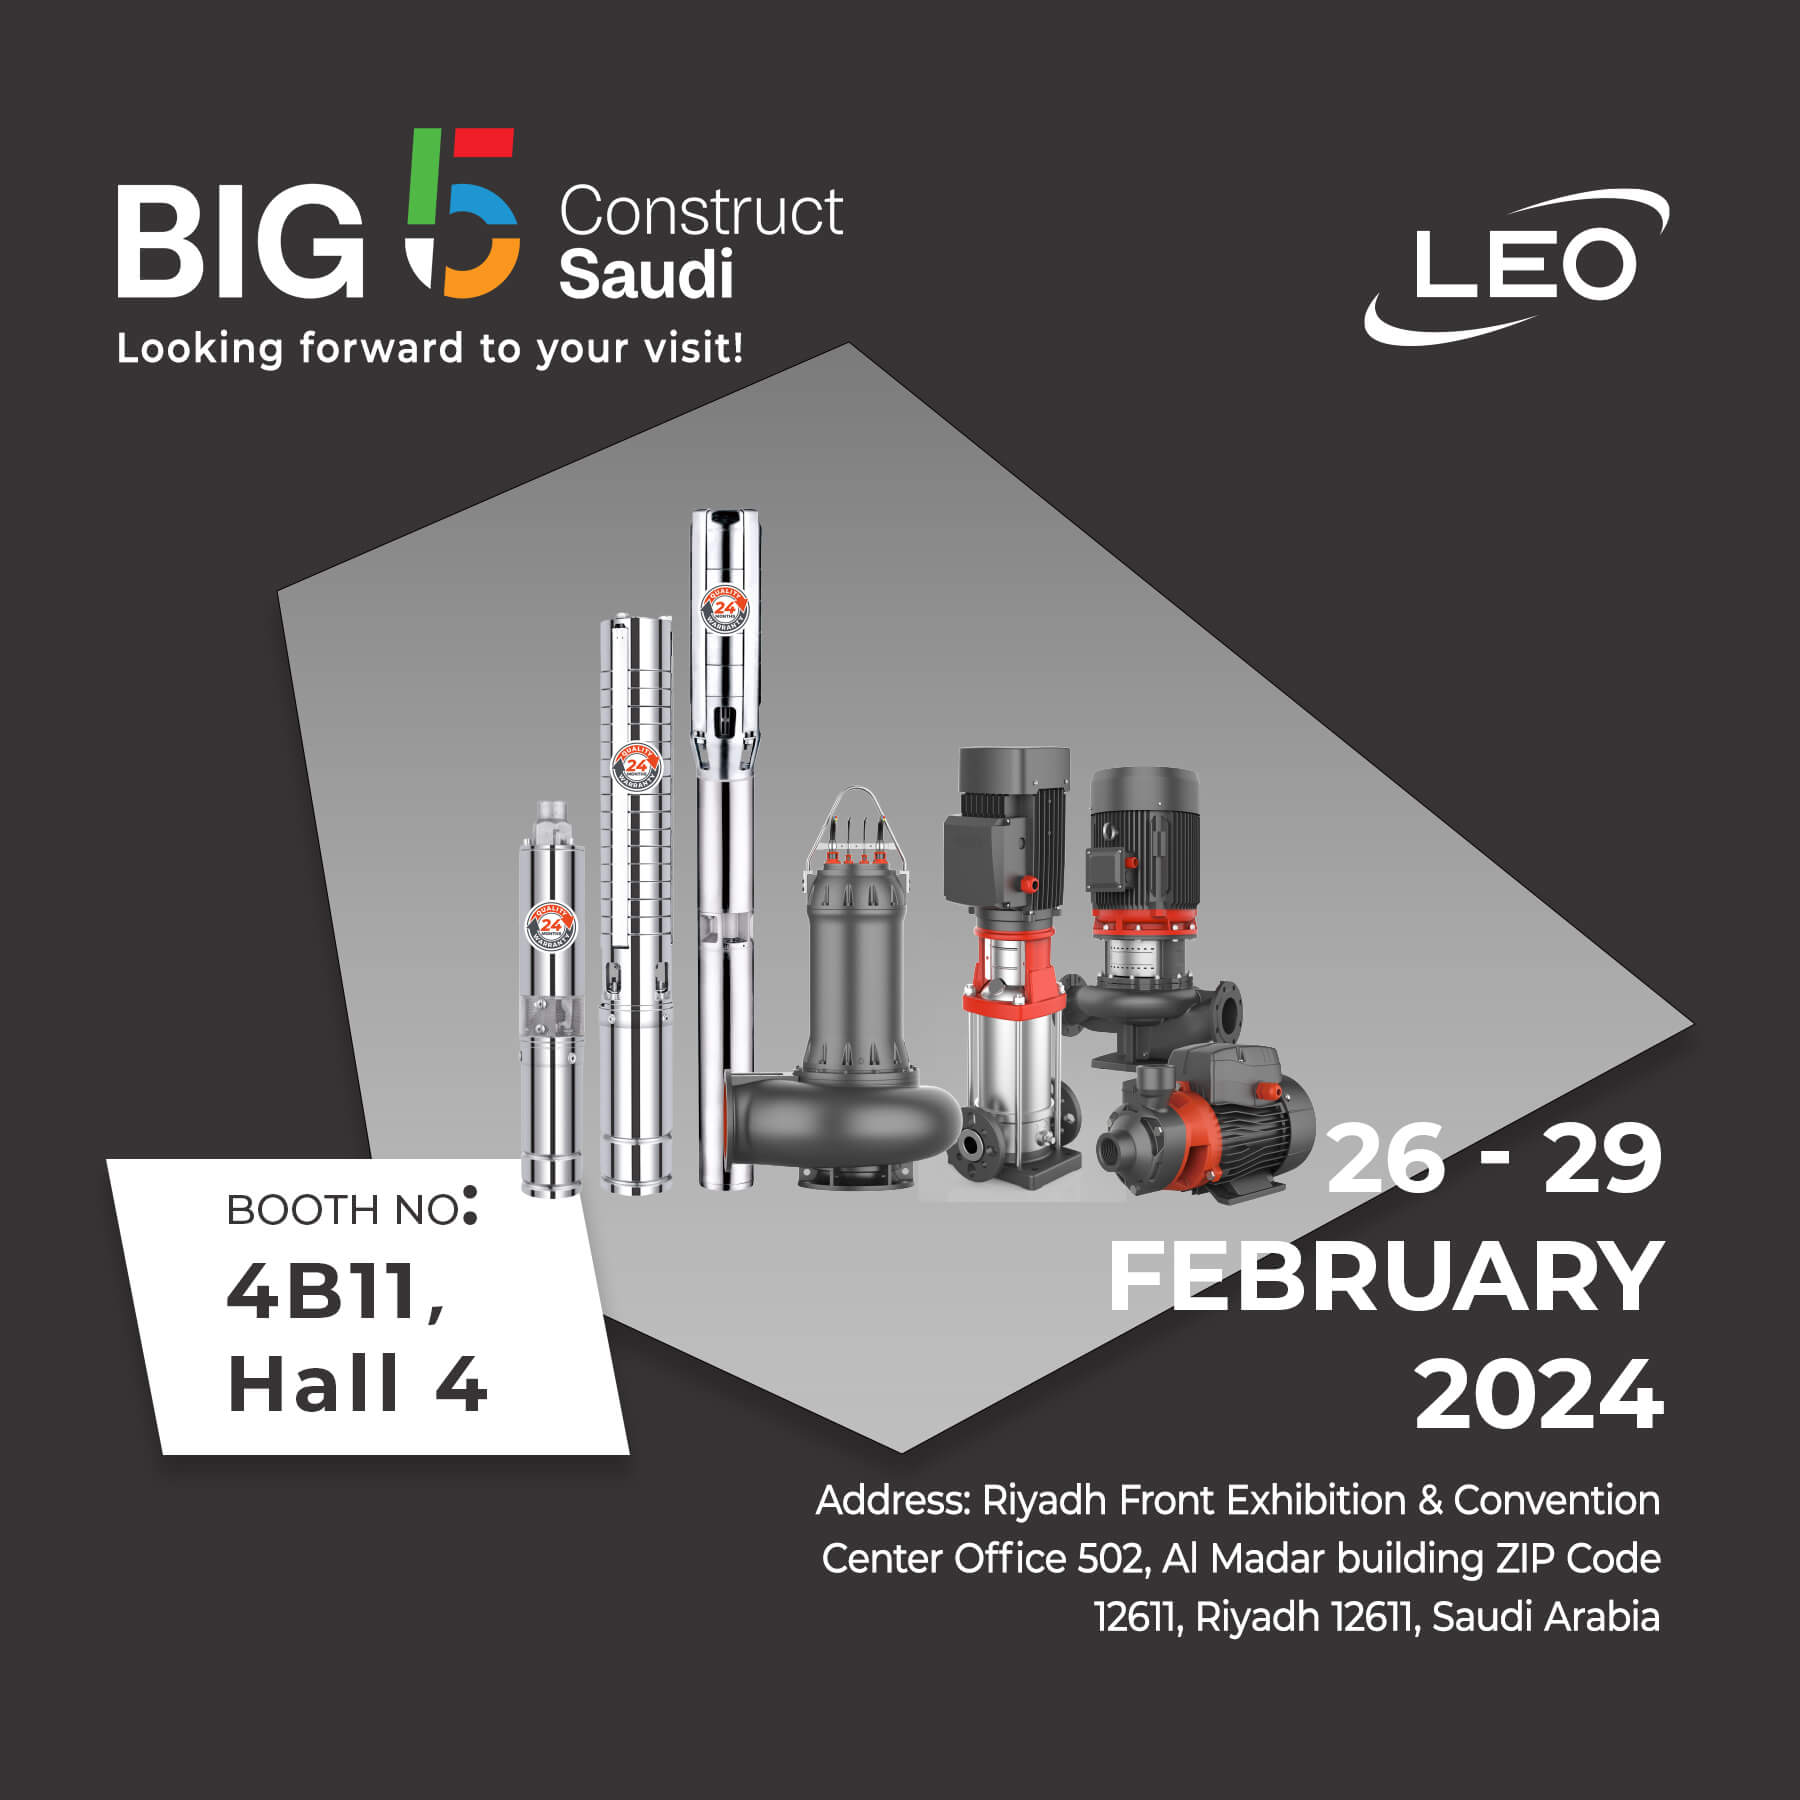 LEO Invitation - Big 5 Construct Saudi 2024